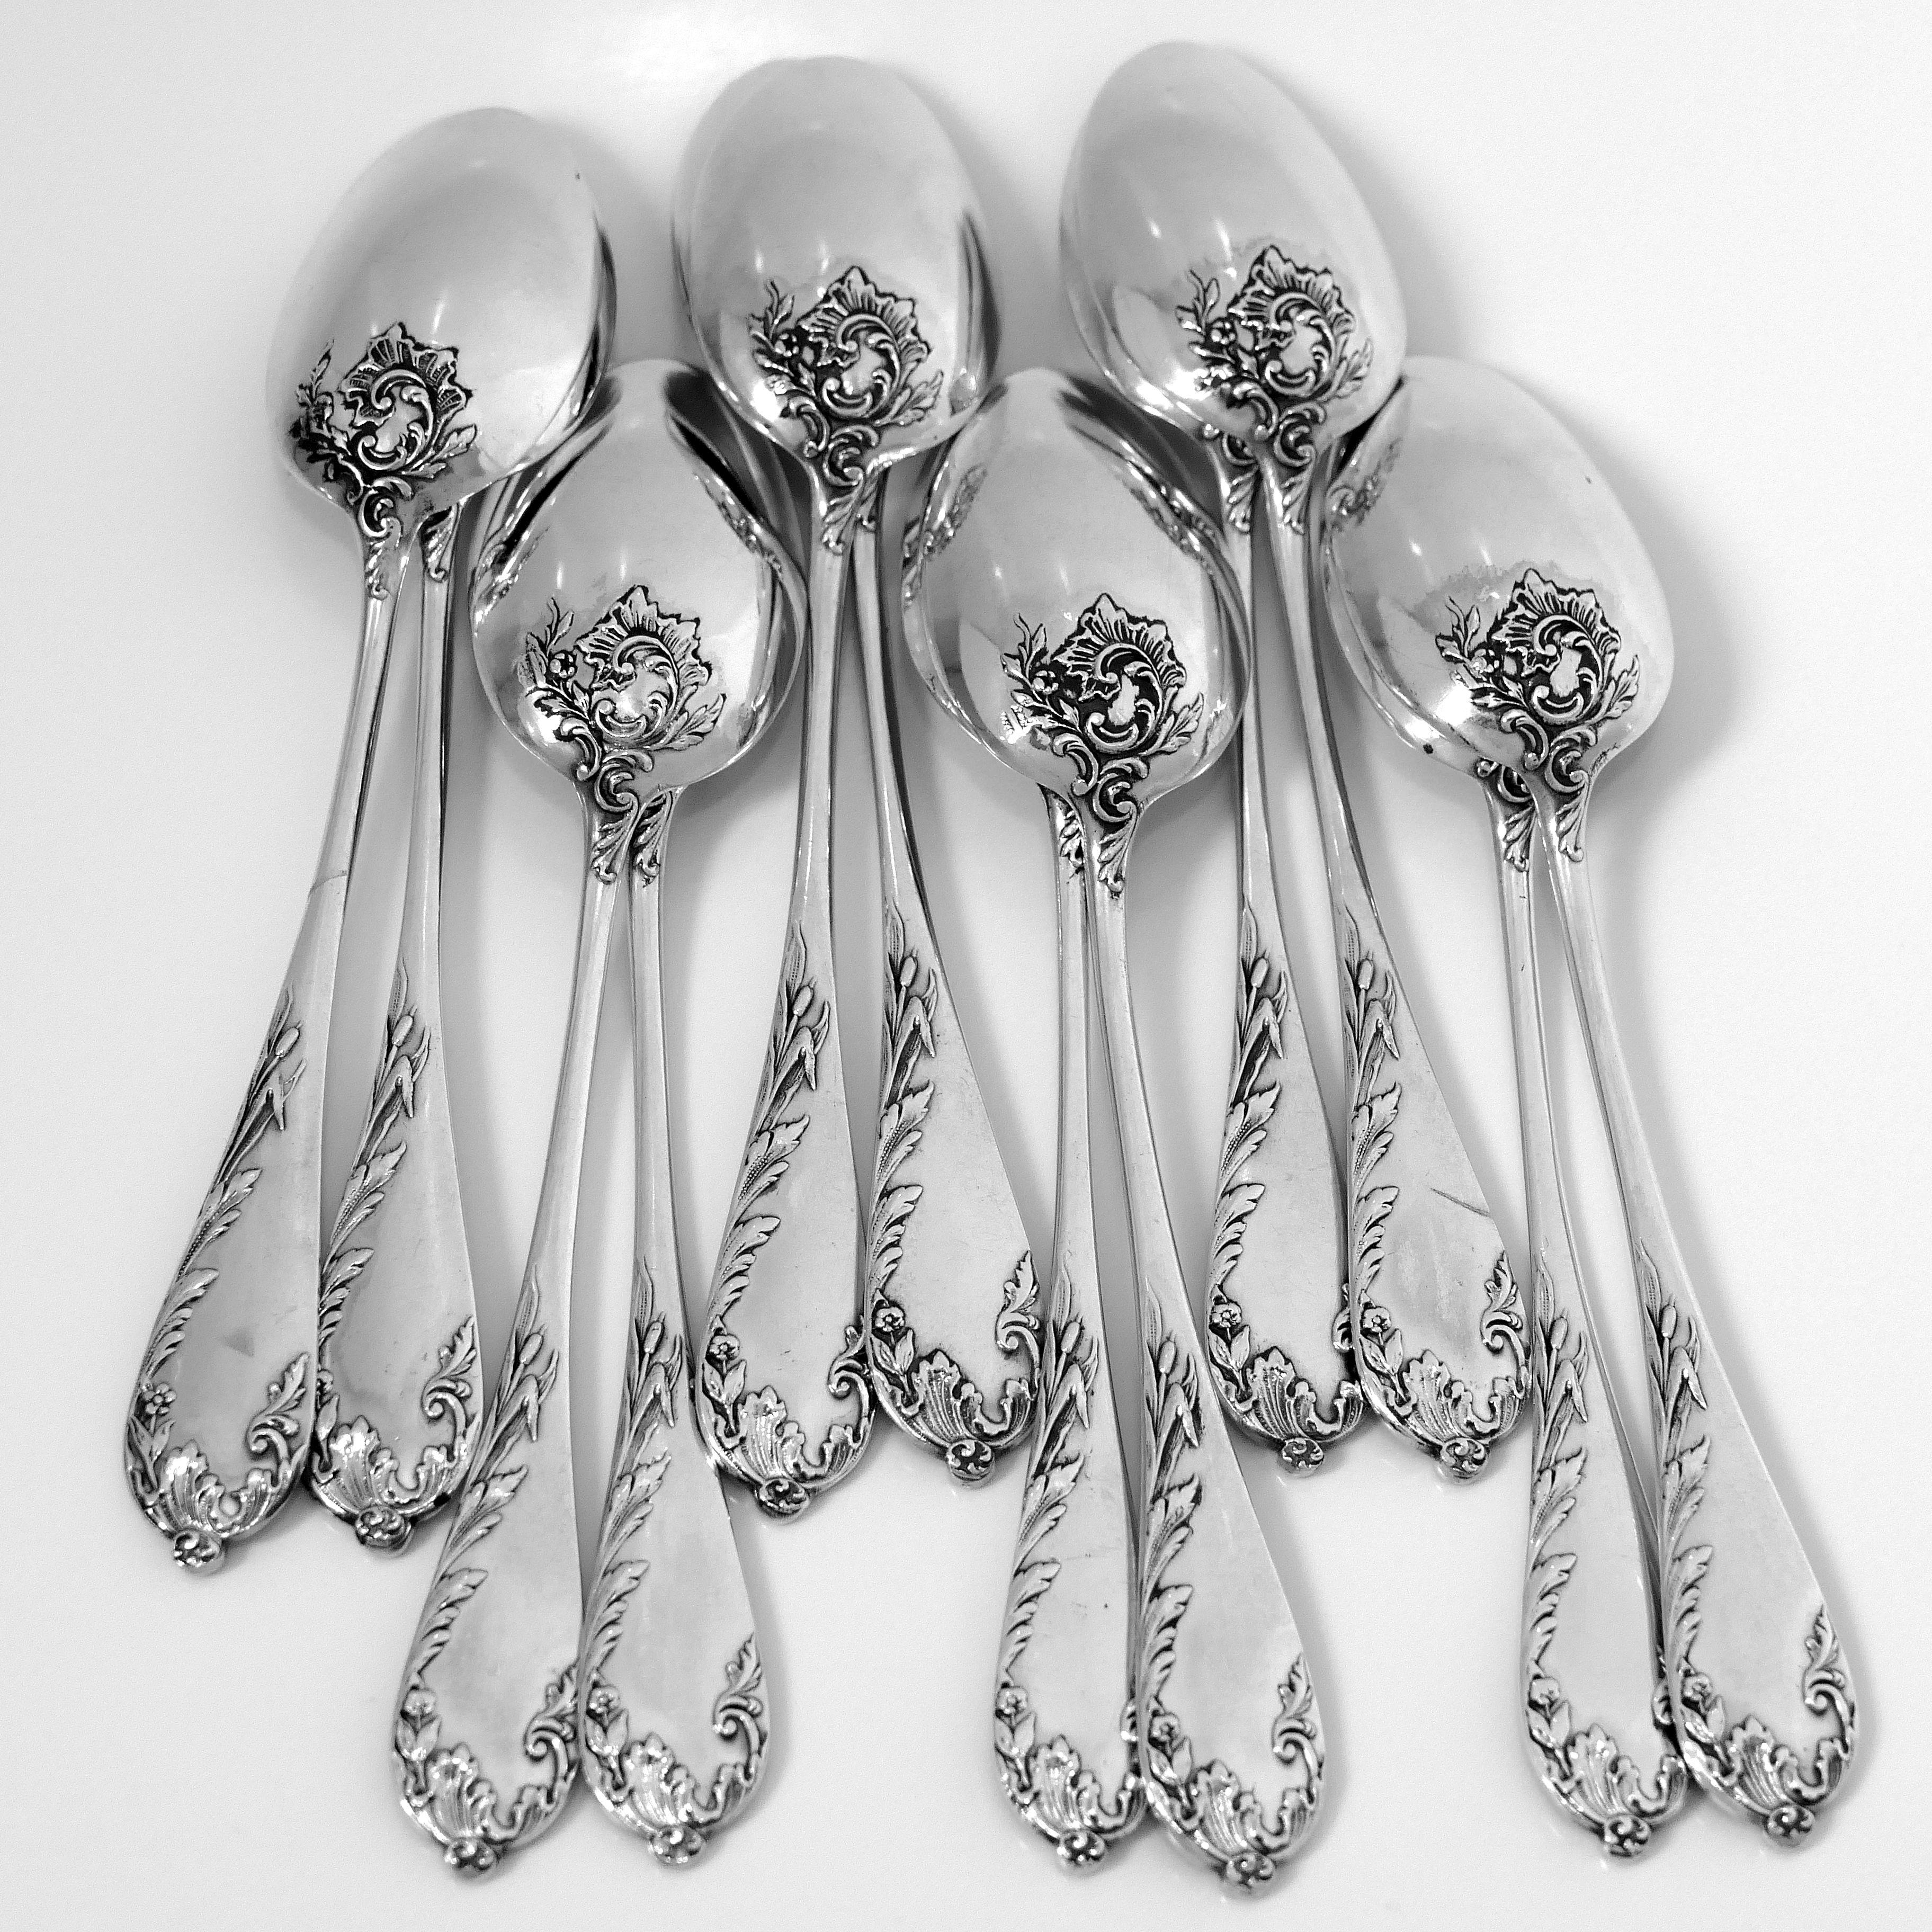 Debain French Sterling Silver Tea Coffee Spoons Set 12 Pc, Art Nouveau For Sale 3